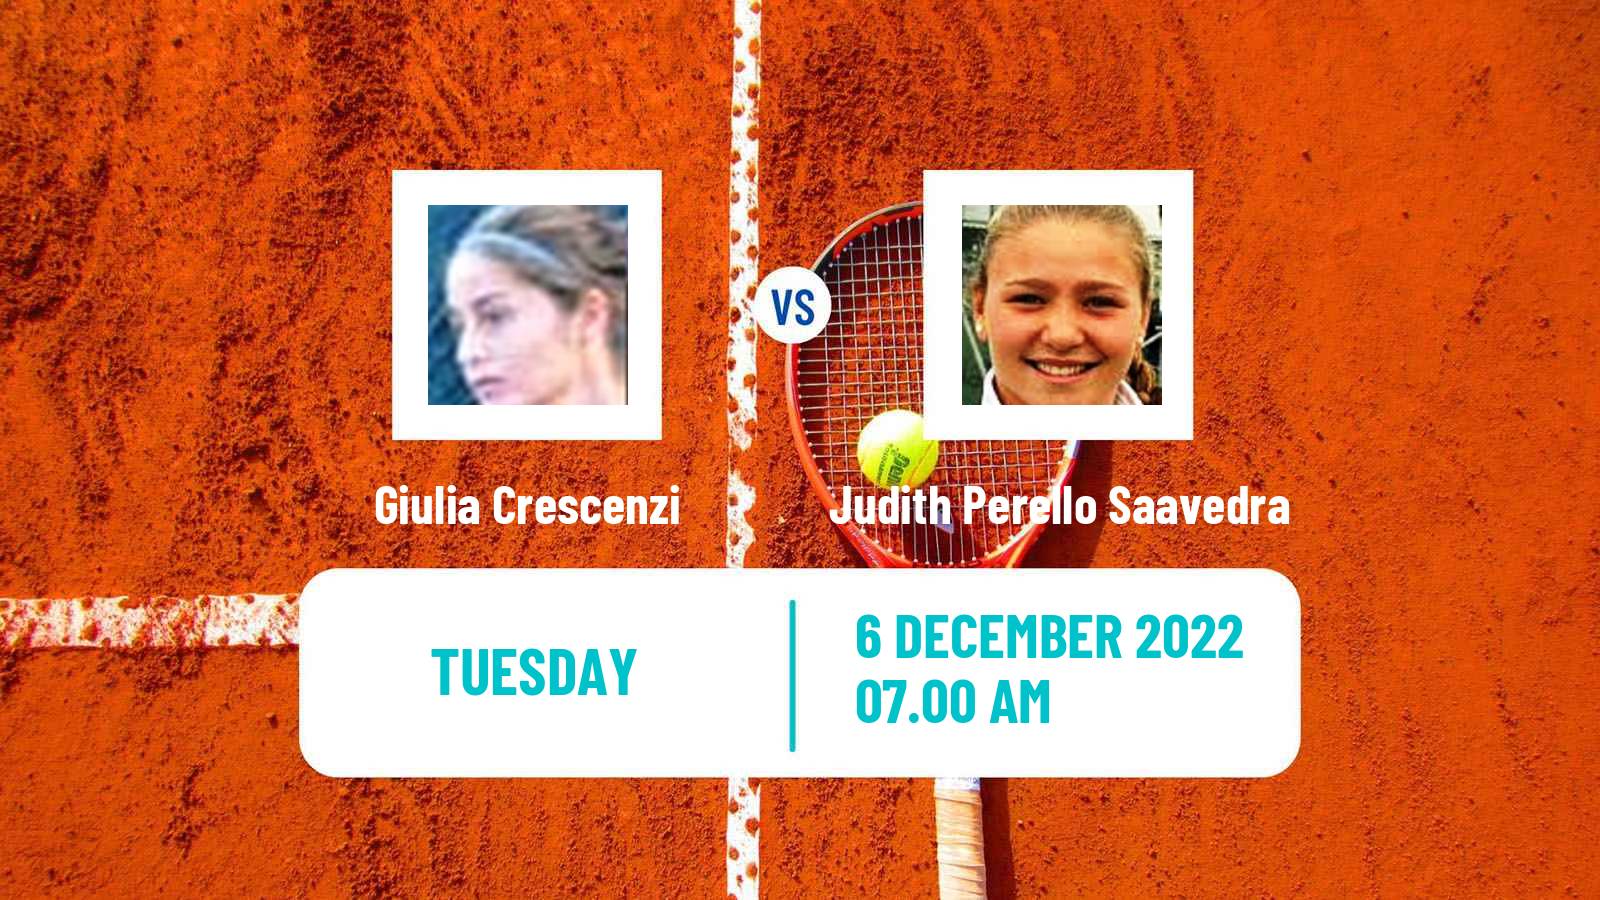 Tennis ITF Tournaments Giulia Crescenzi - Judith Perello Saavedra